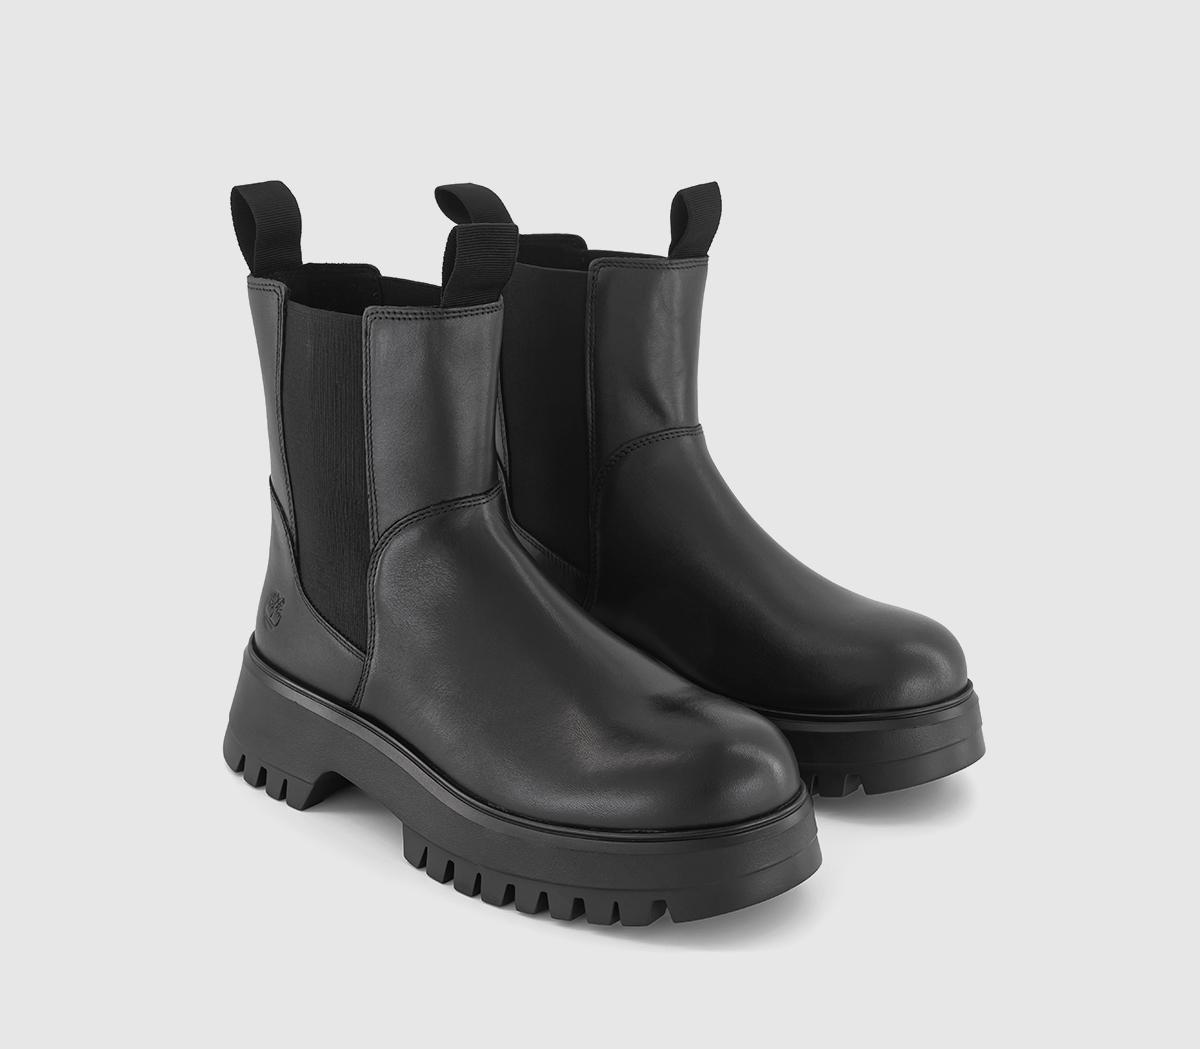 Timberland Tn Chelsea Boots Black, 8